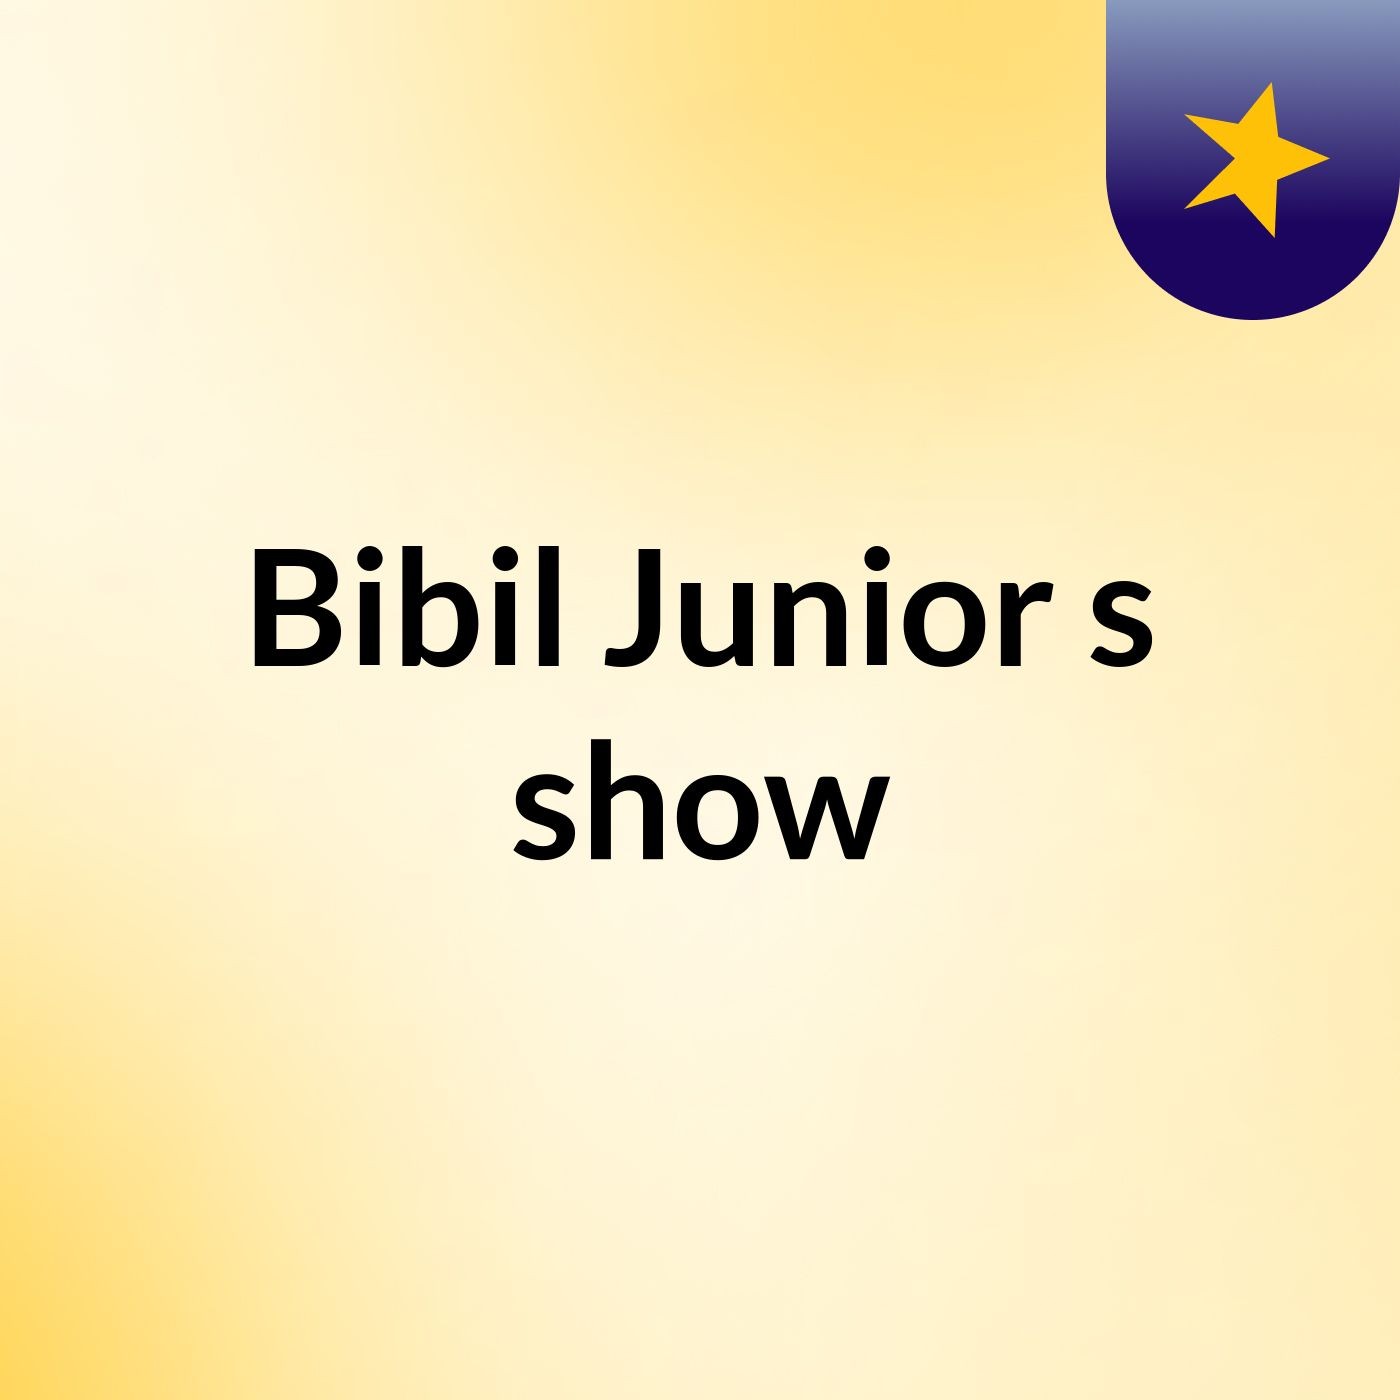 Bibil Junior's show